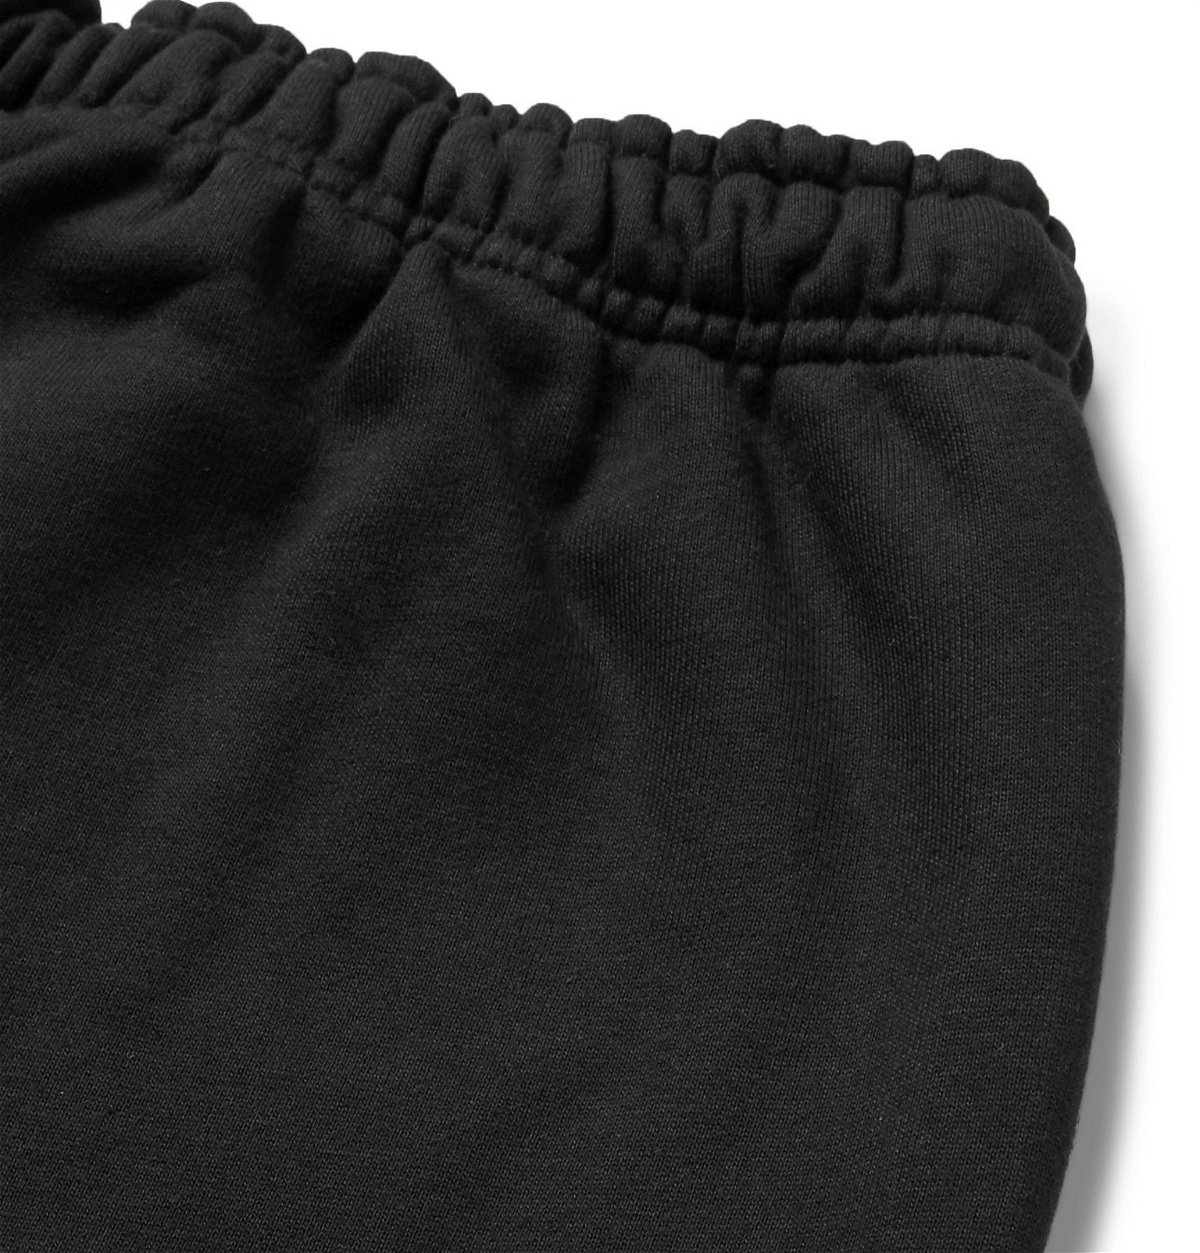 Nike - NRG Tapered Fleece-Back Cotton-Blend Jersey Sweatpants - Black Nike